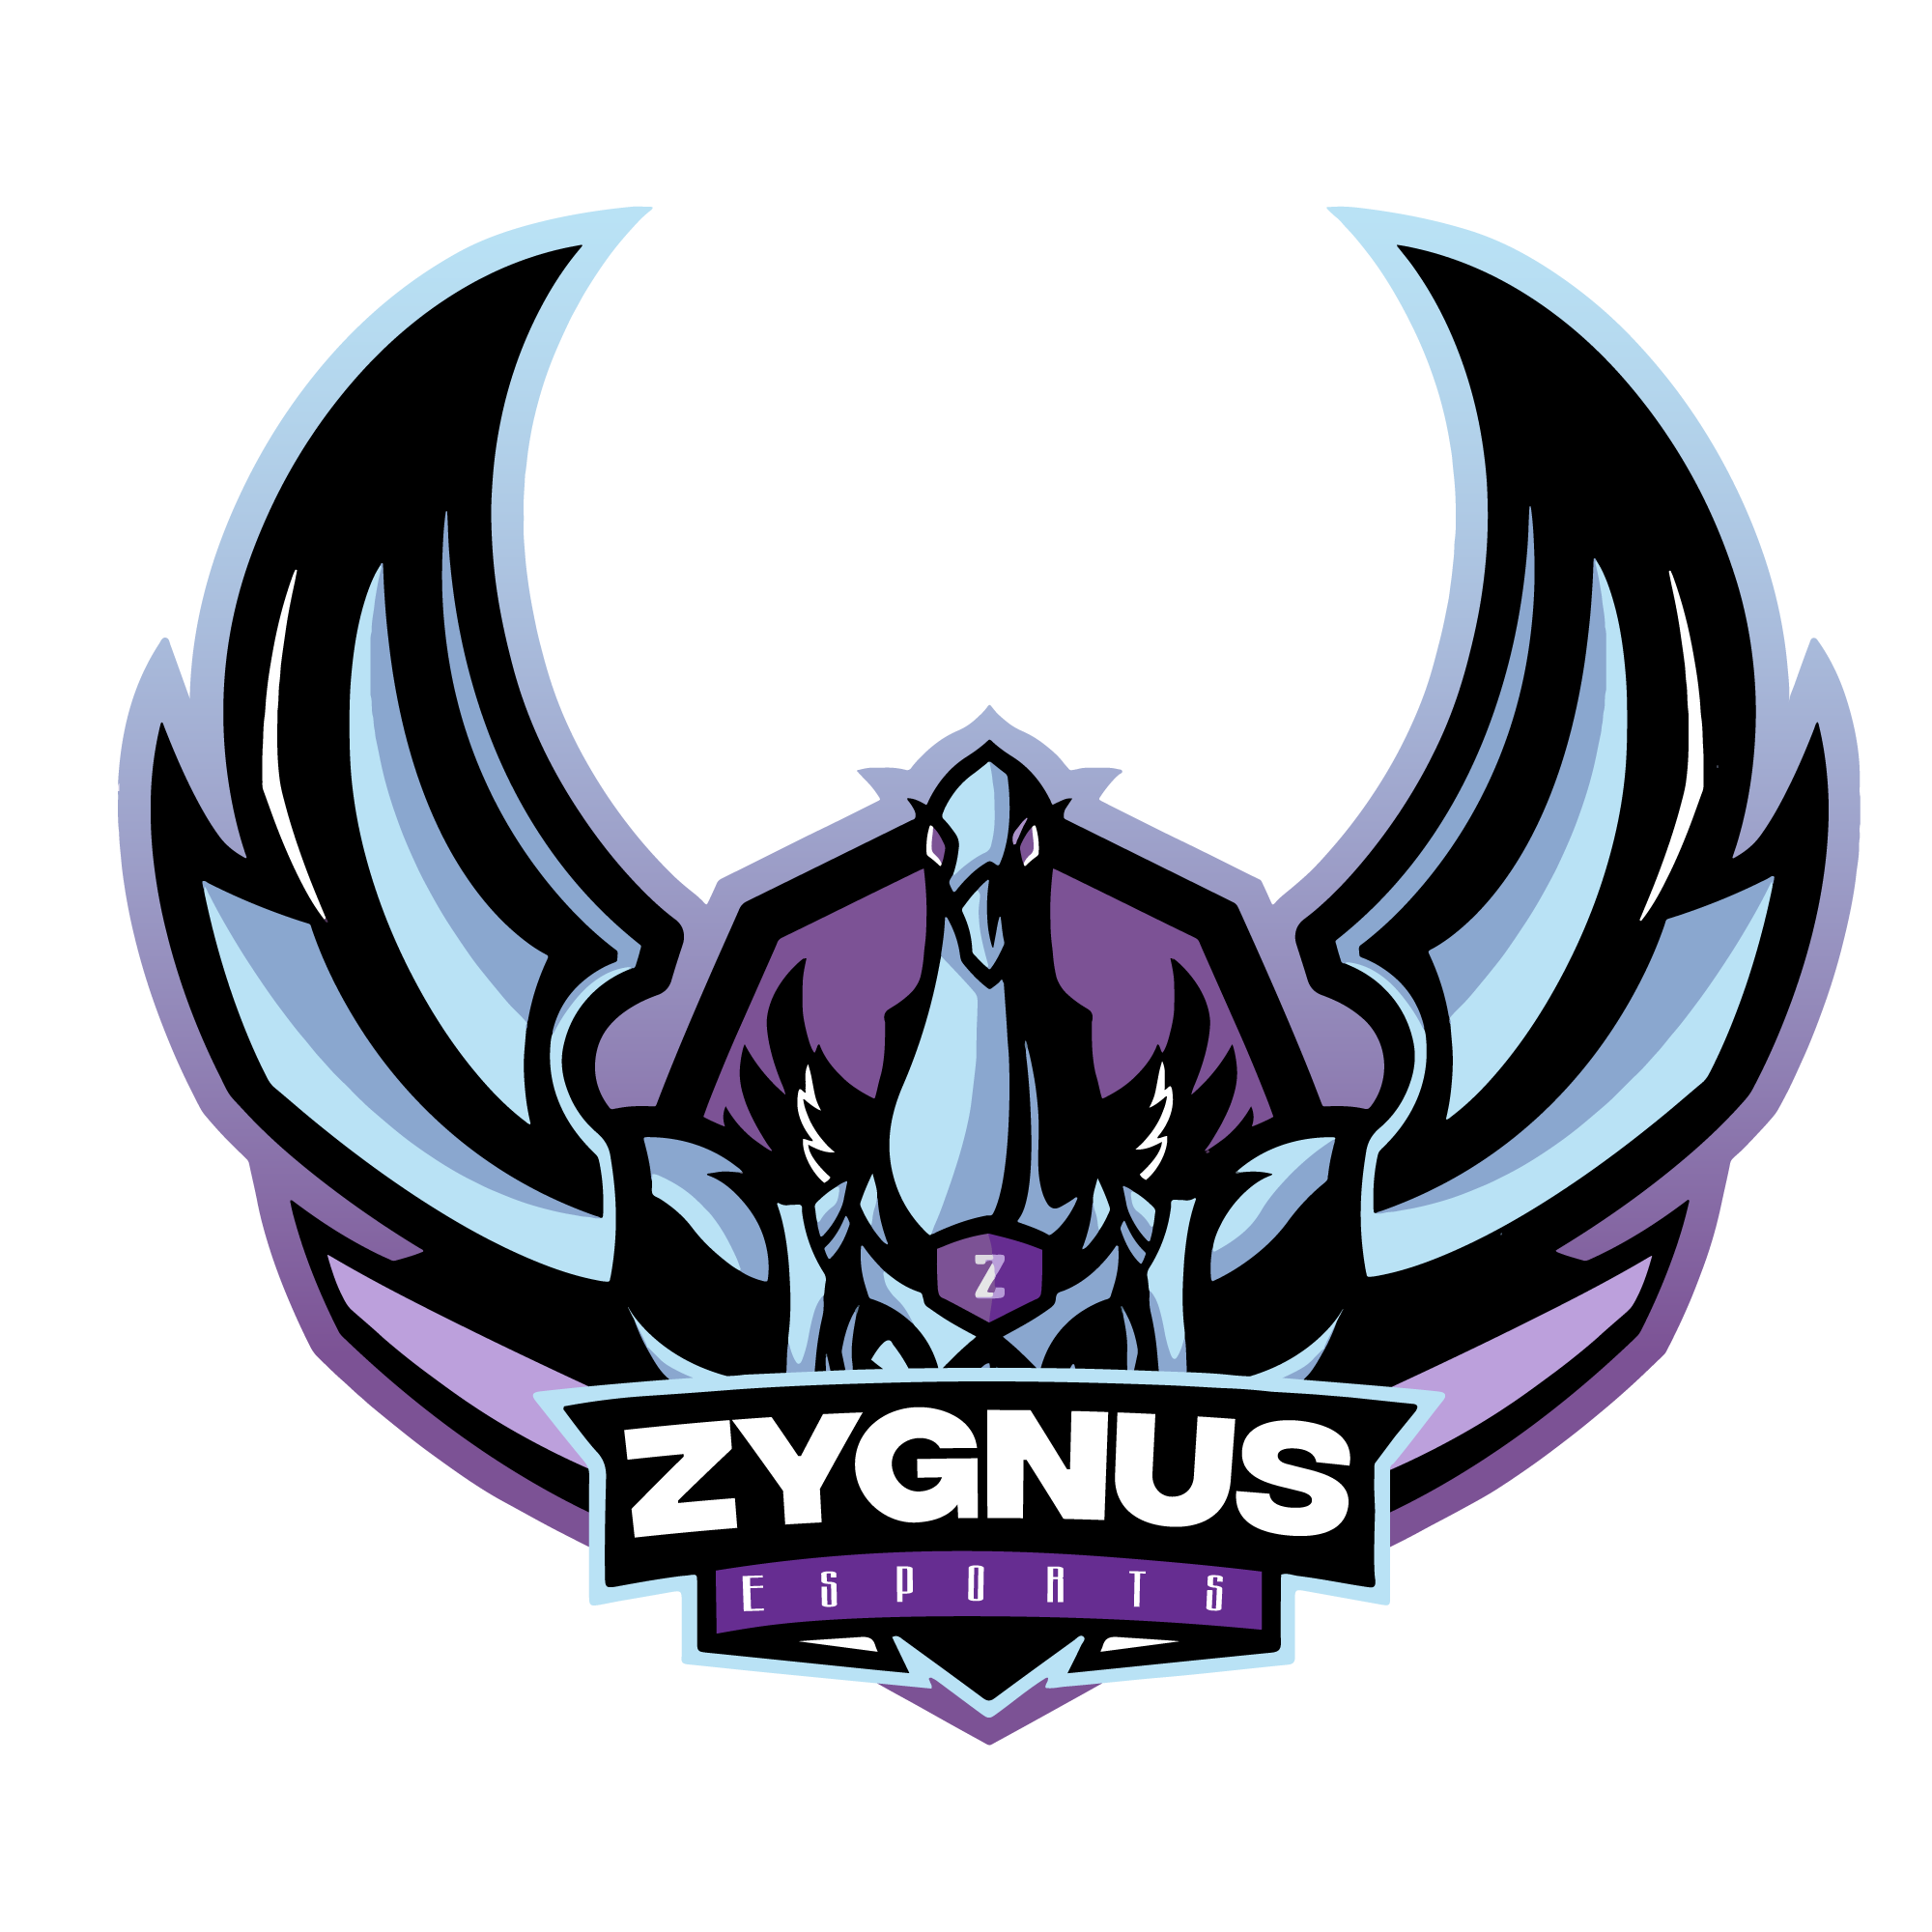 Zygnus eSports